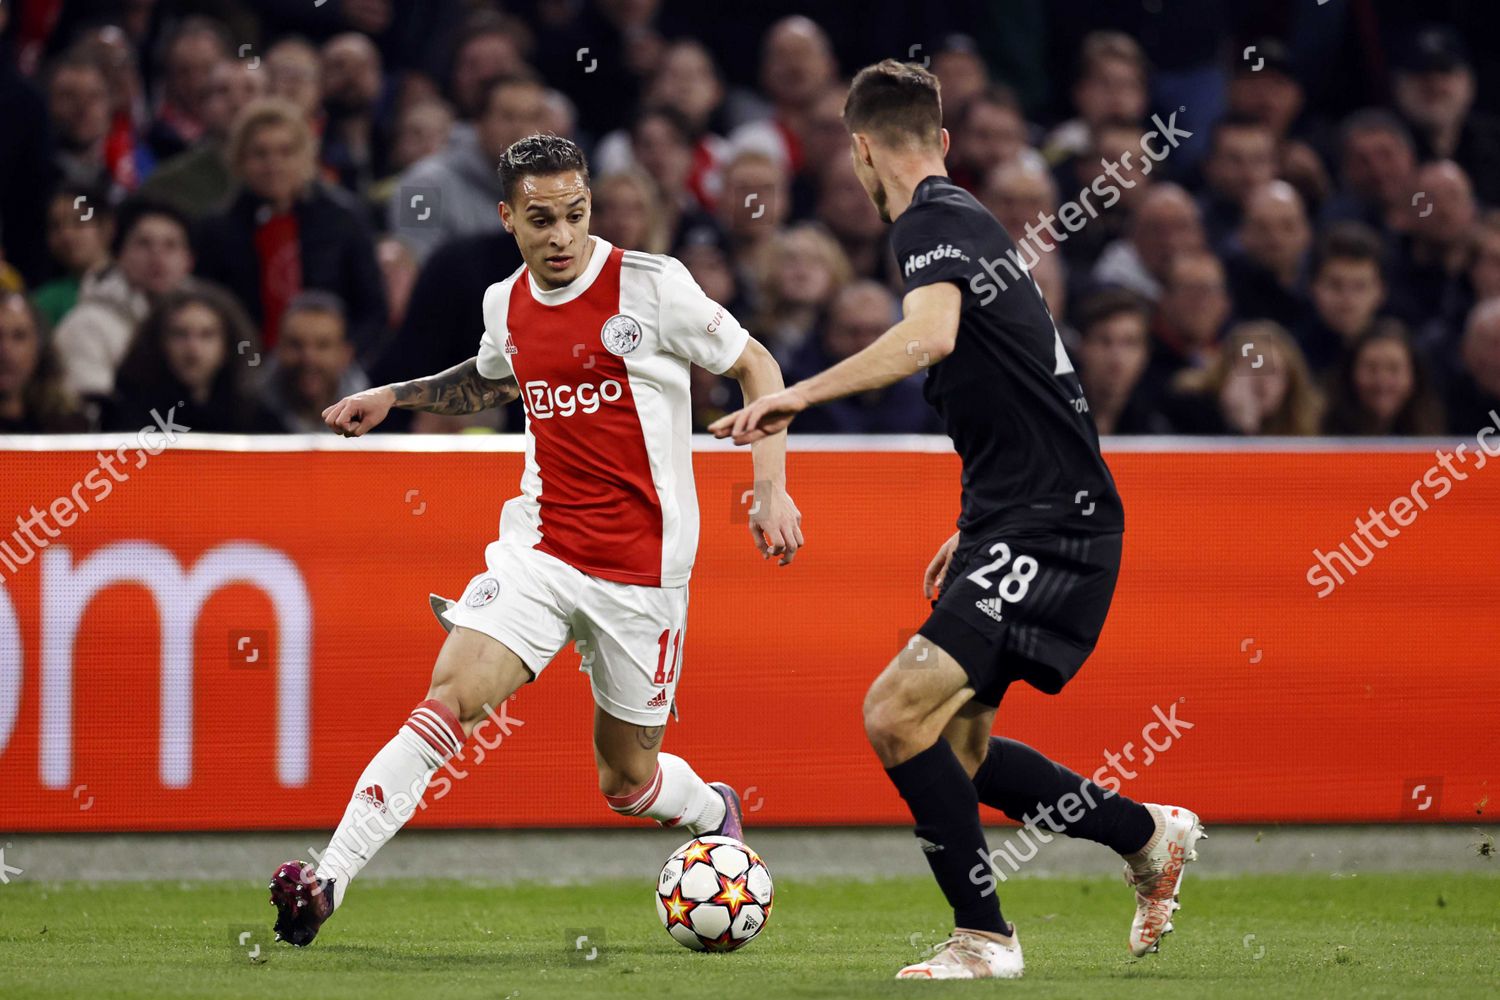 Ajax vs benfica